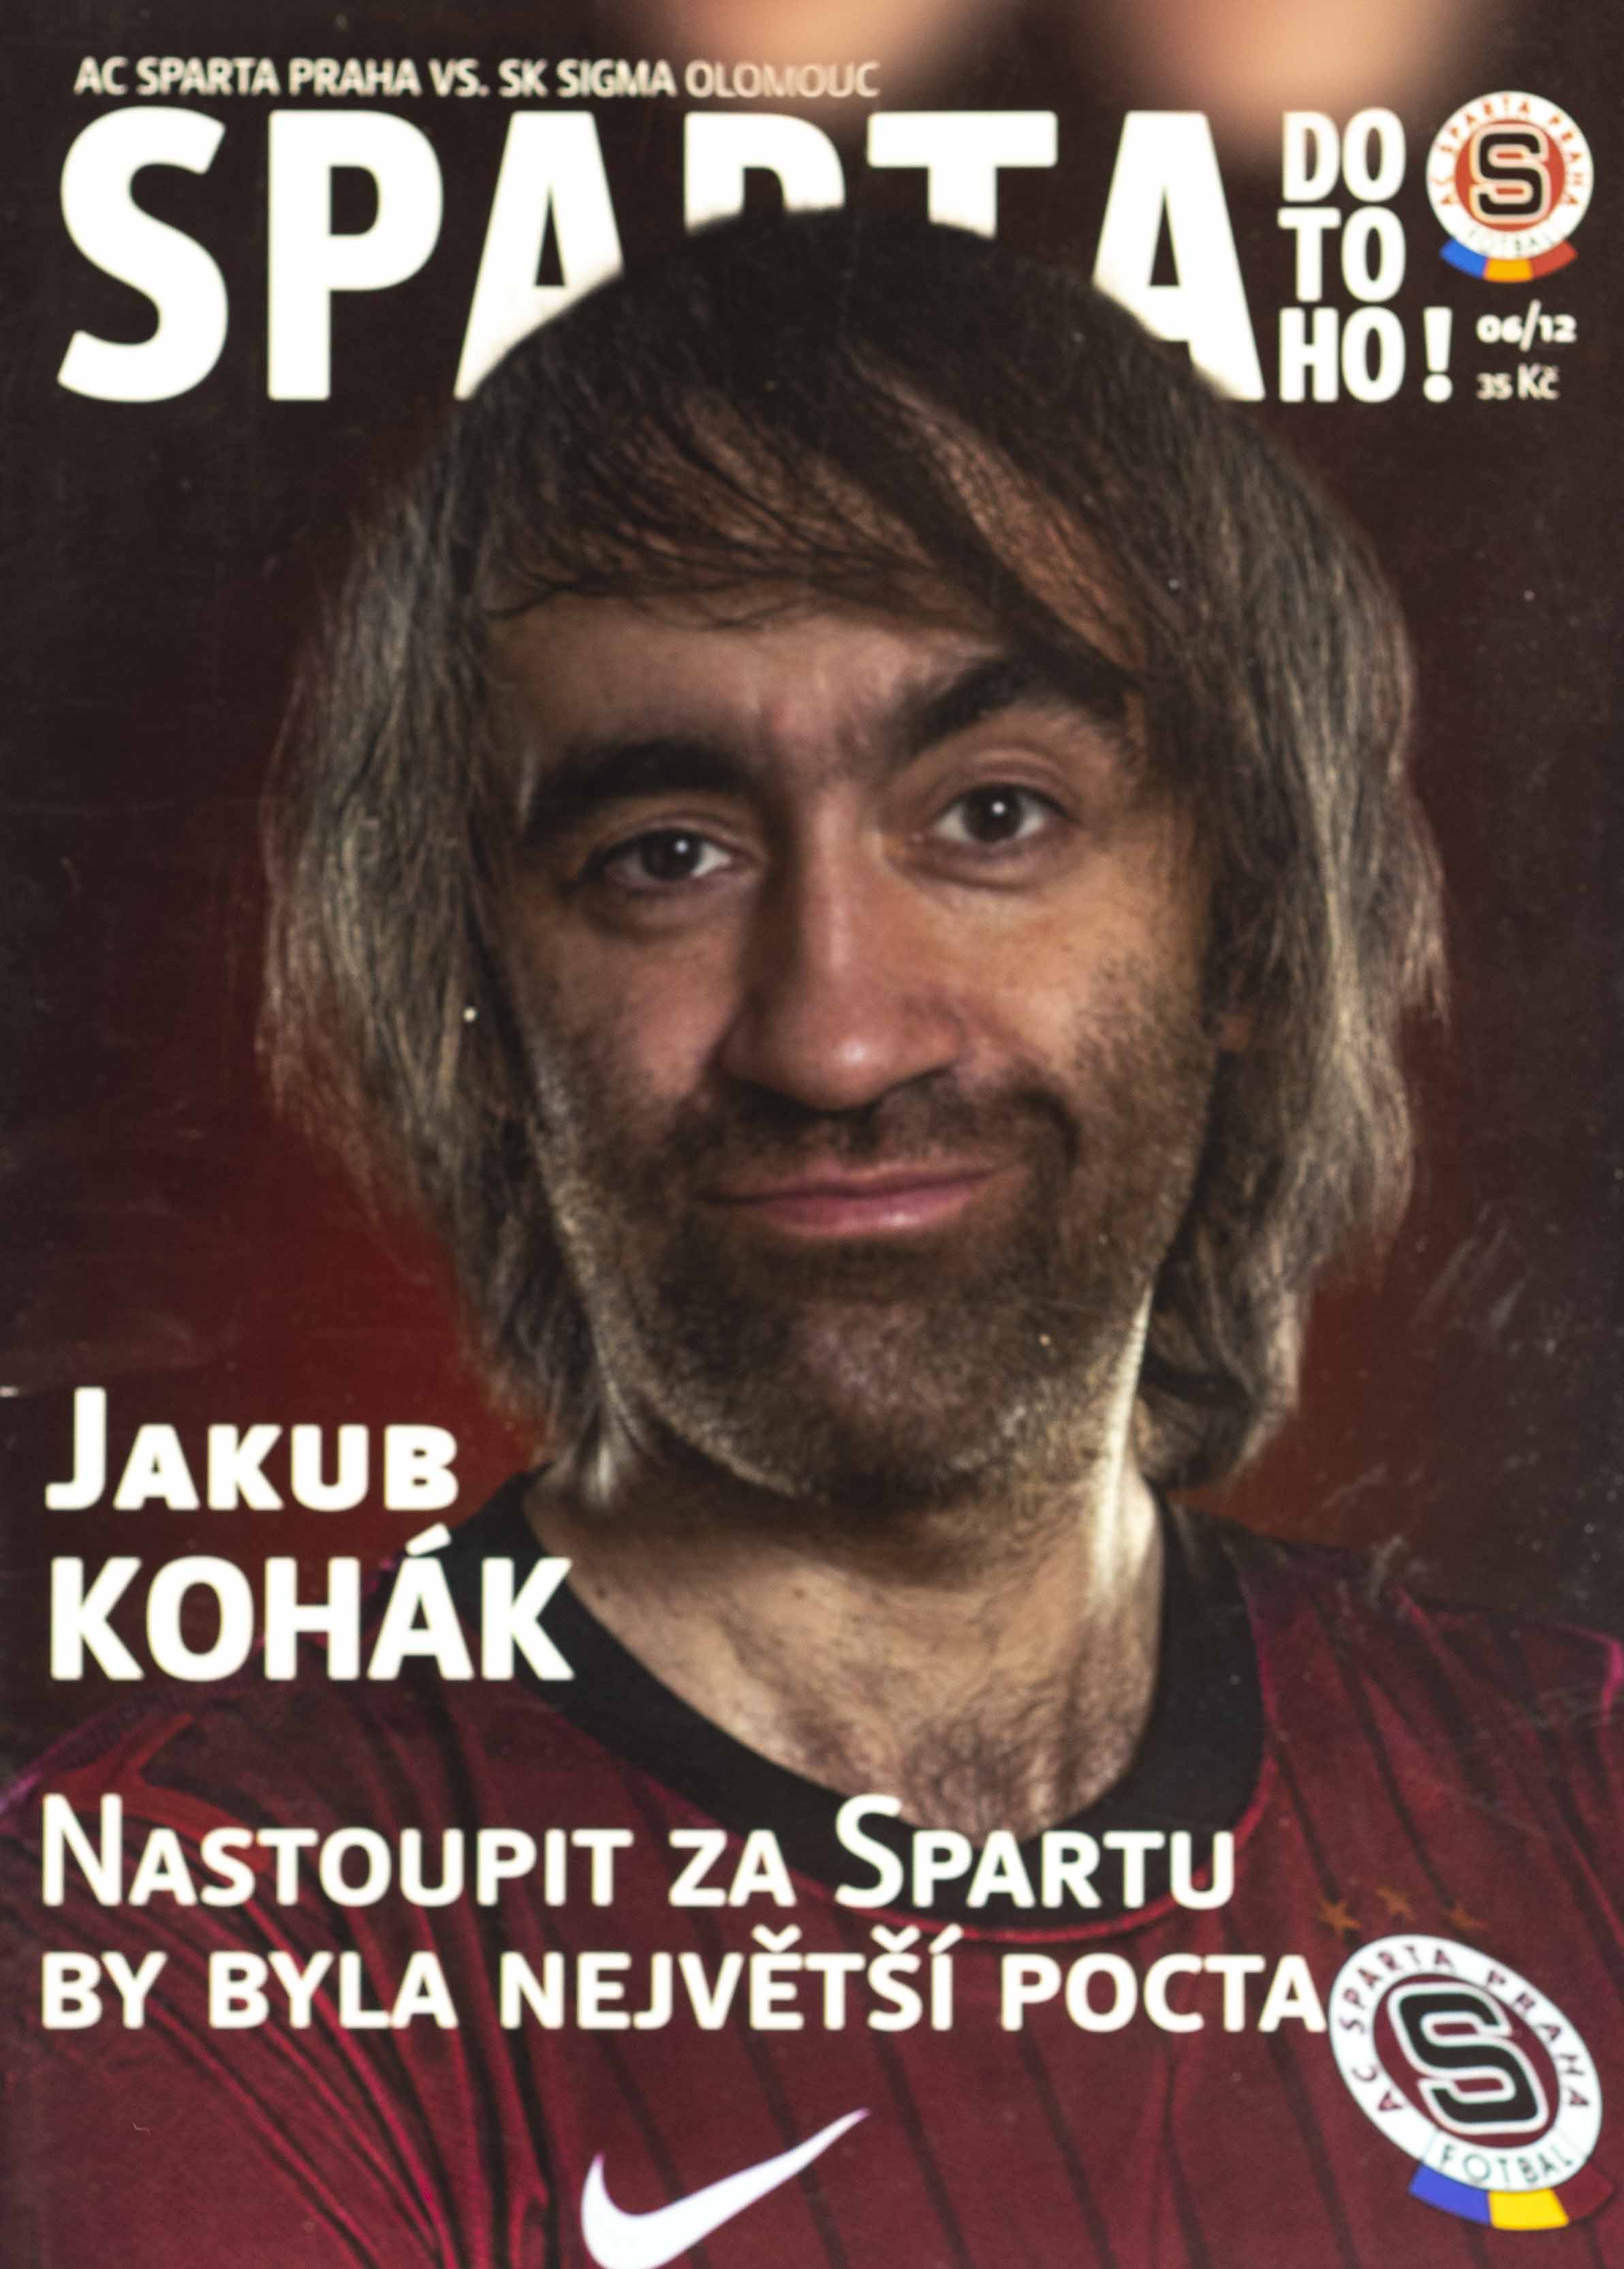 Program Sparta v. SK Sigma Olomouc, 06/12, Jakub Kohák